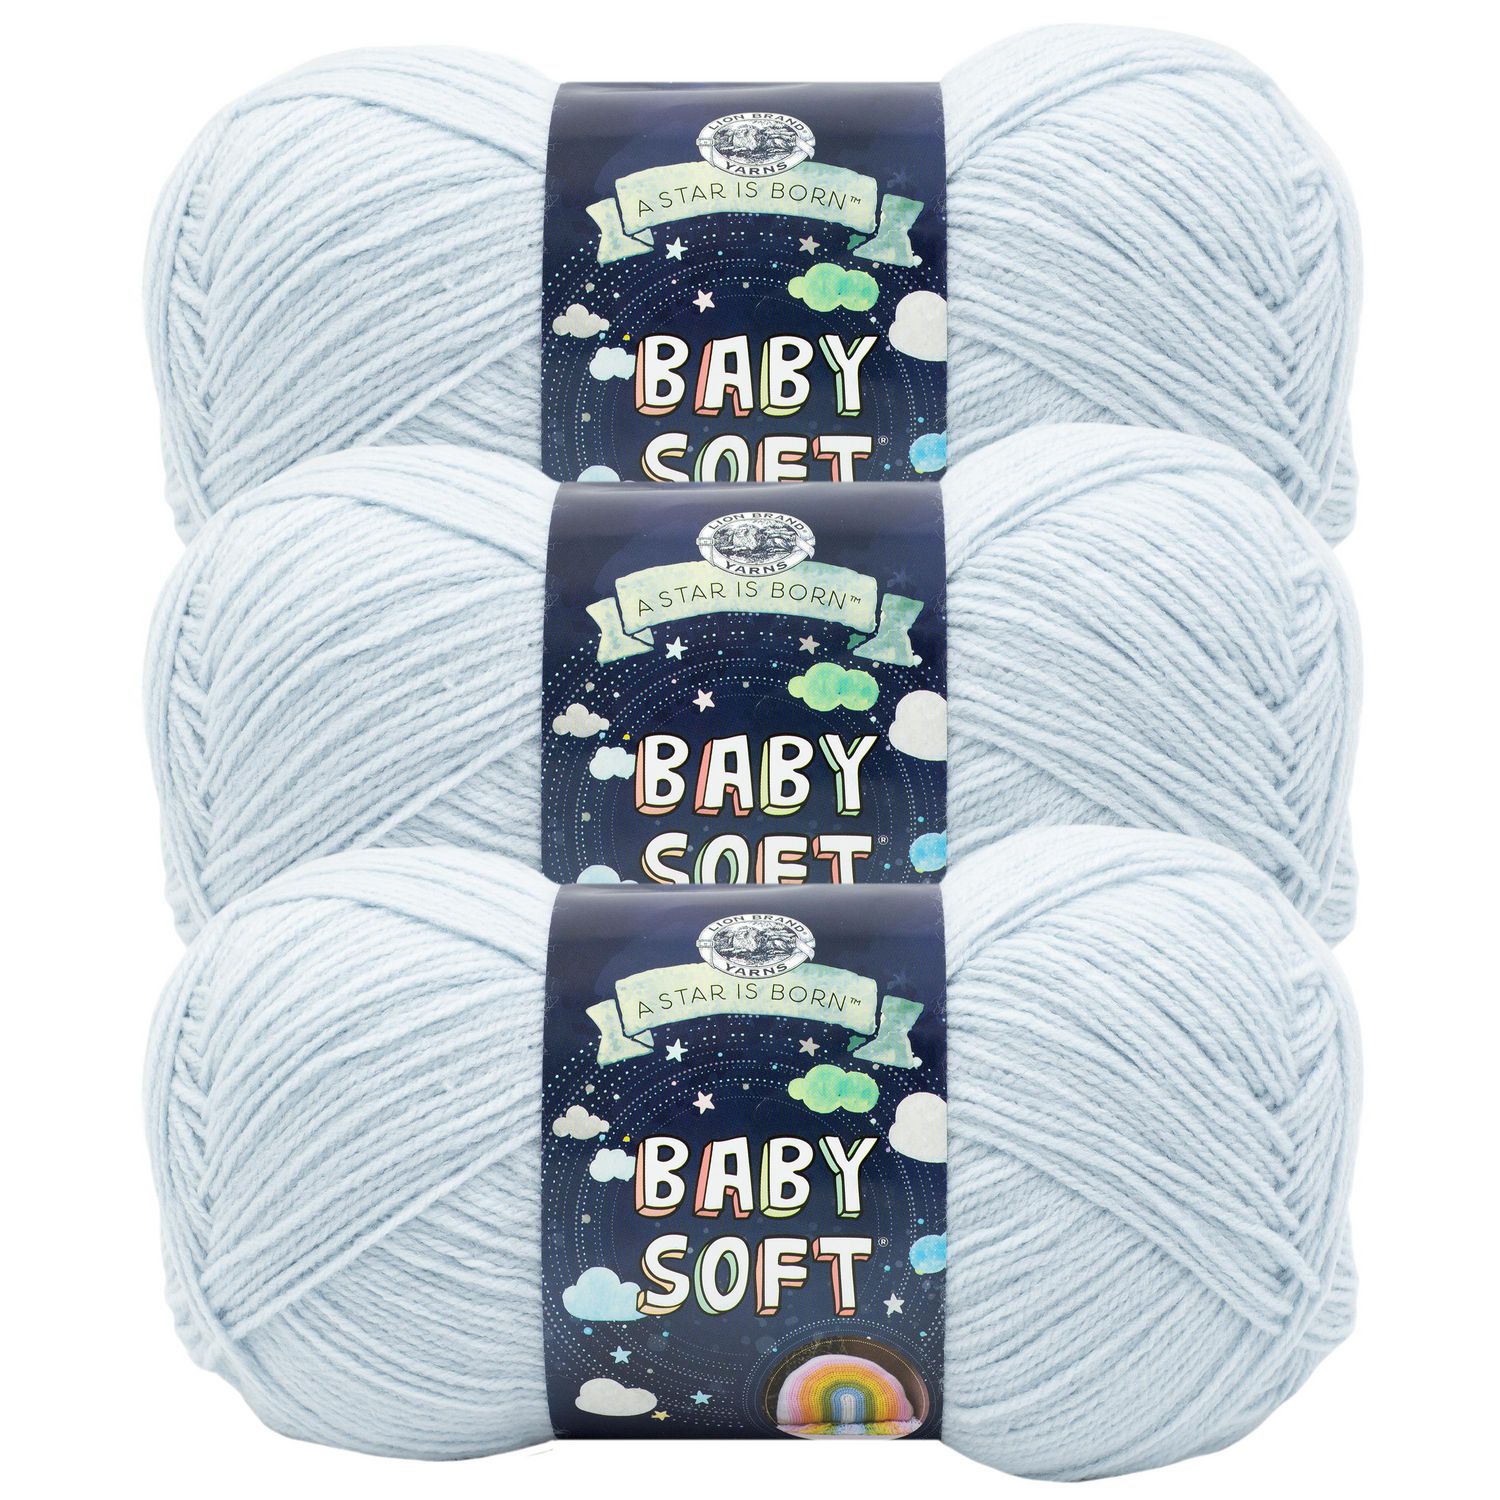 Lion Brand Babysoft Yarn in Canada, Free Shipping at